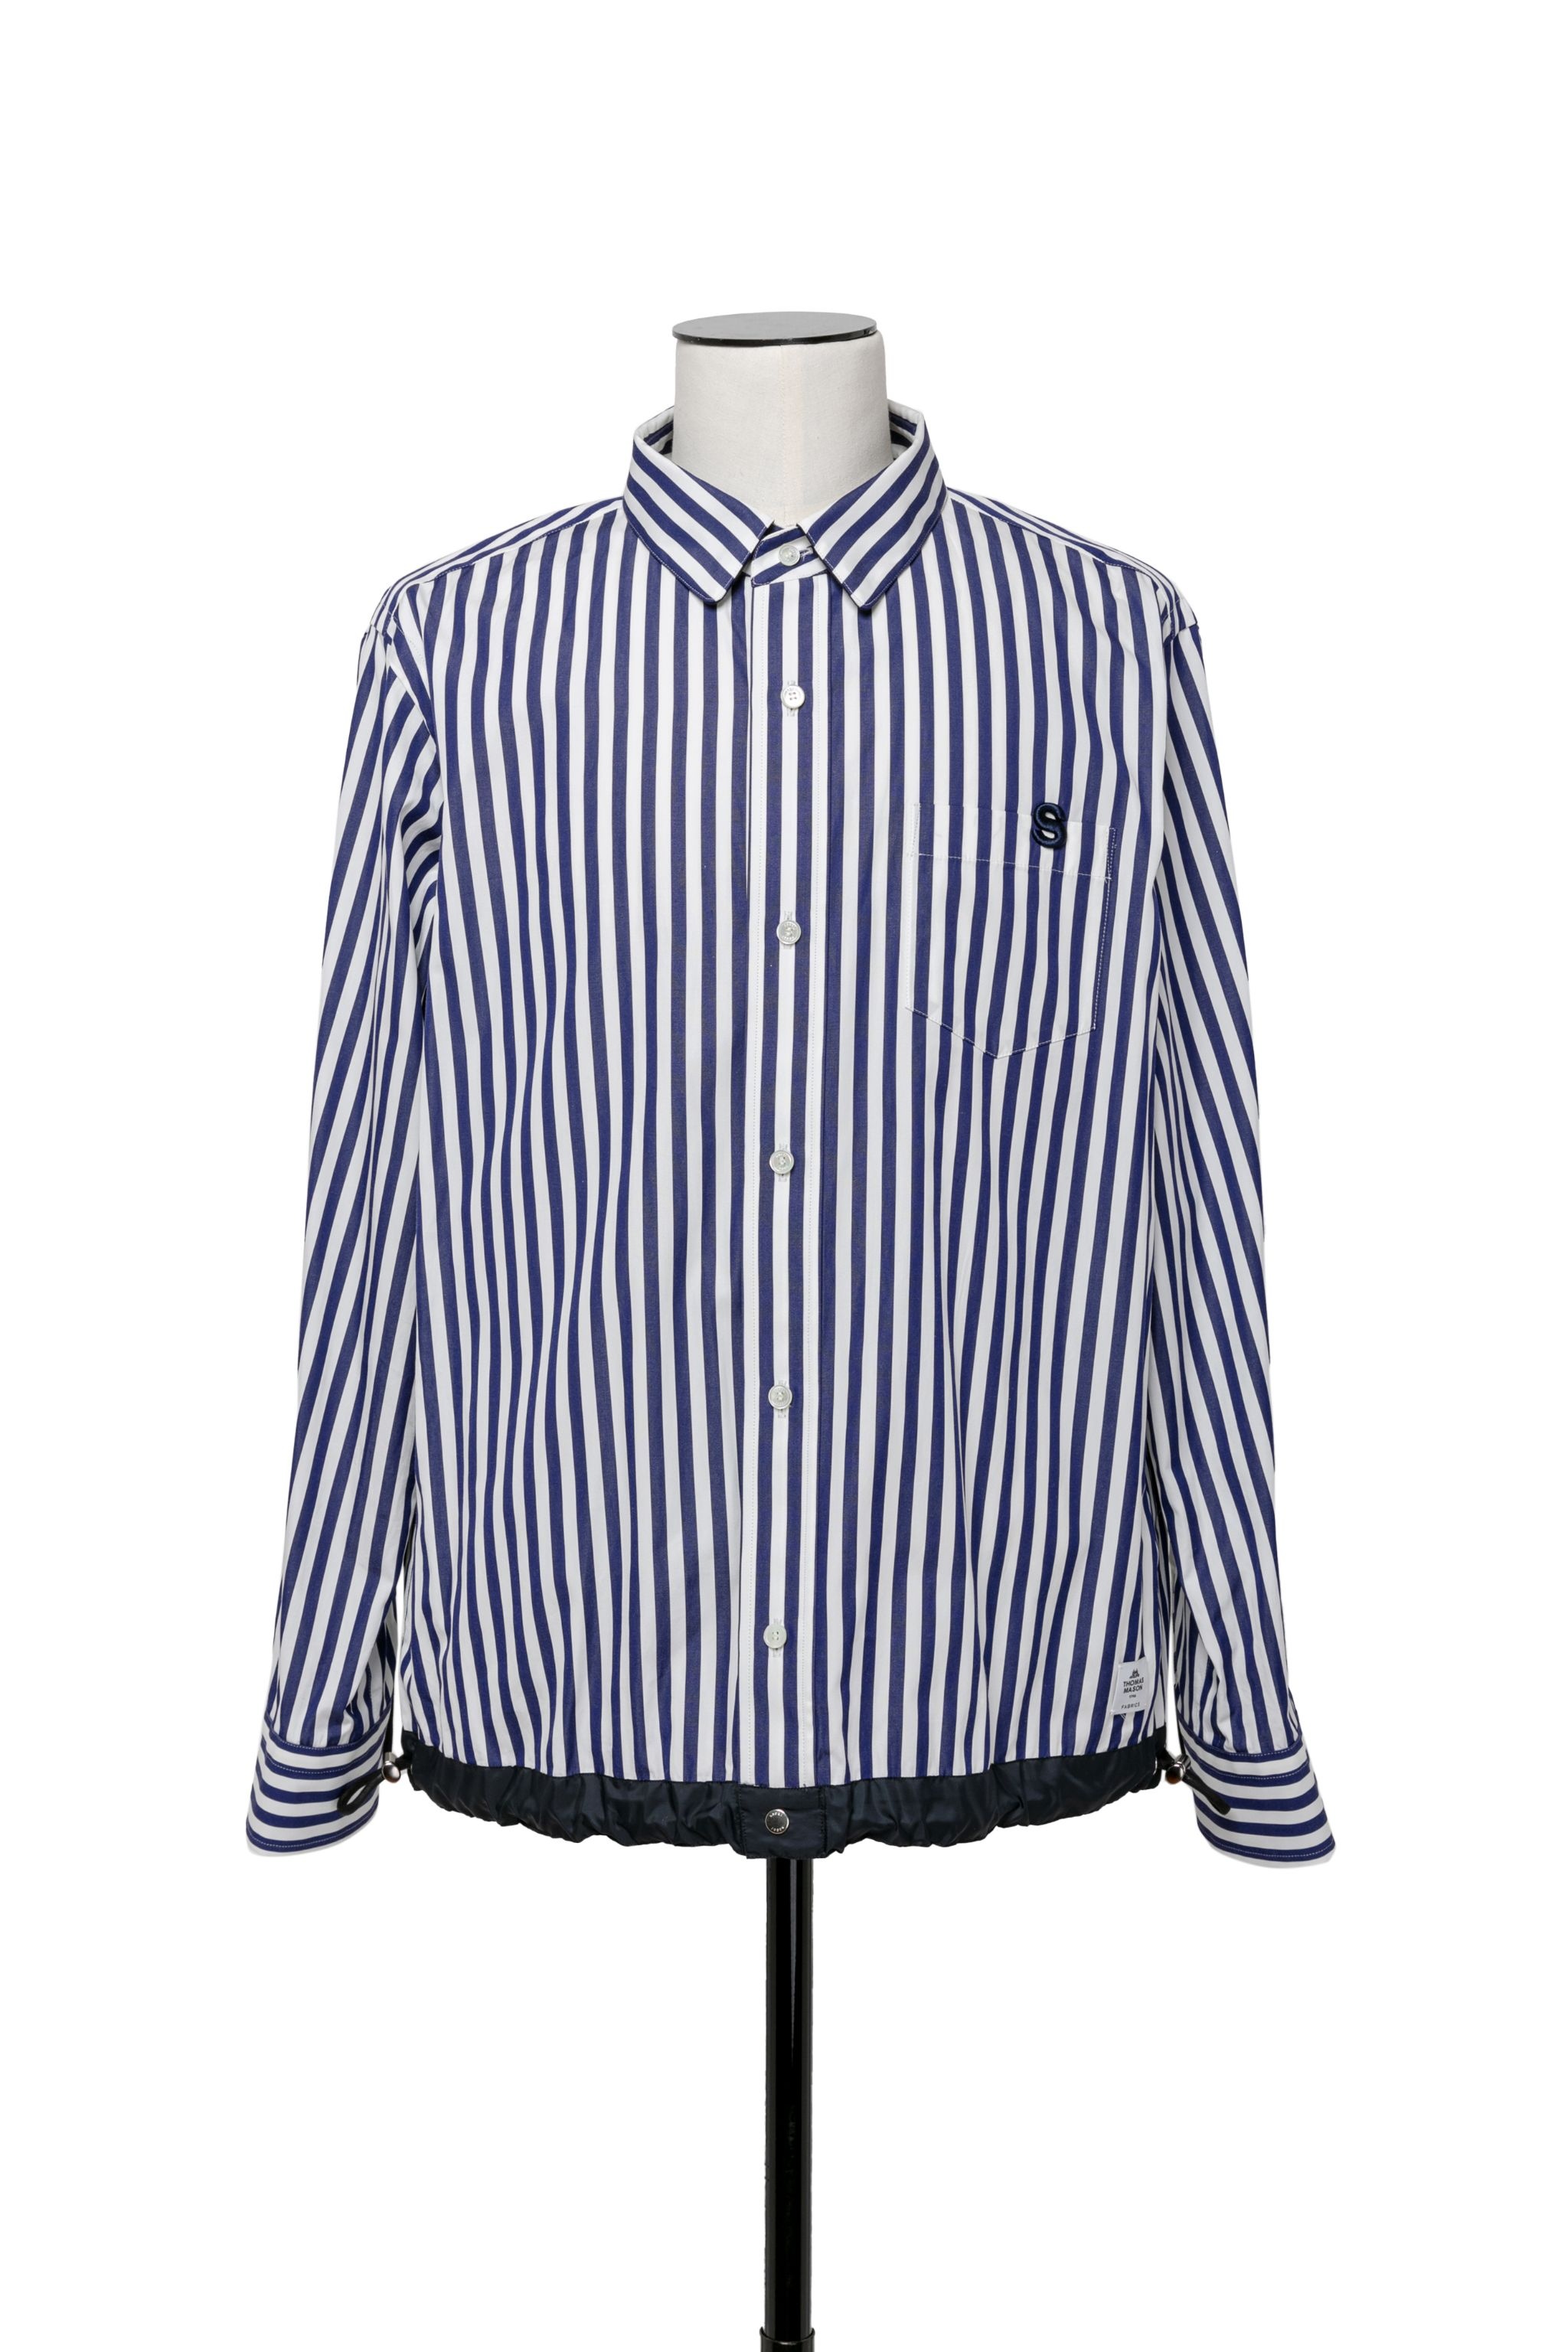 Thomas Mason s Cotton Poplin Shirt - 1